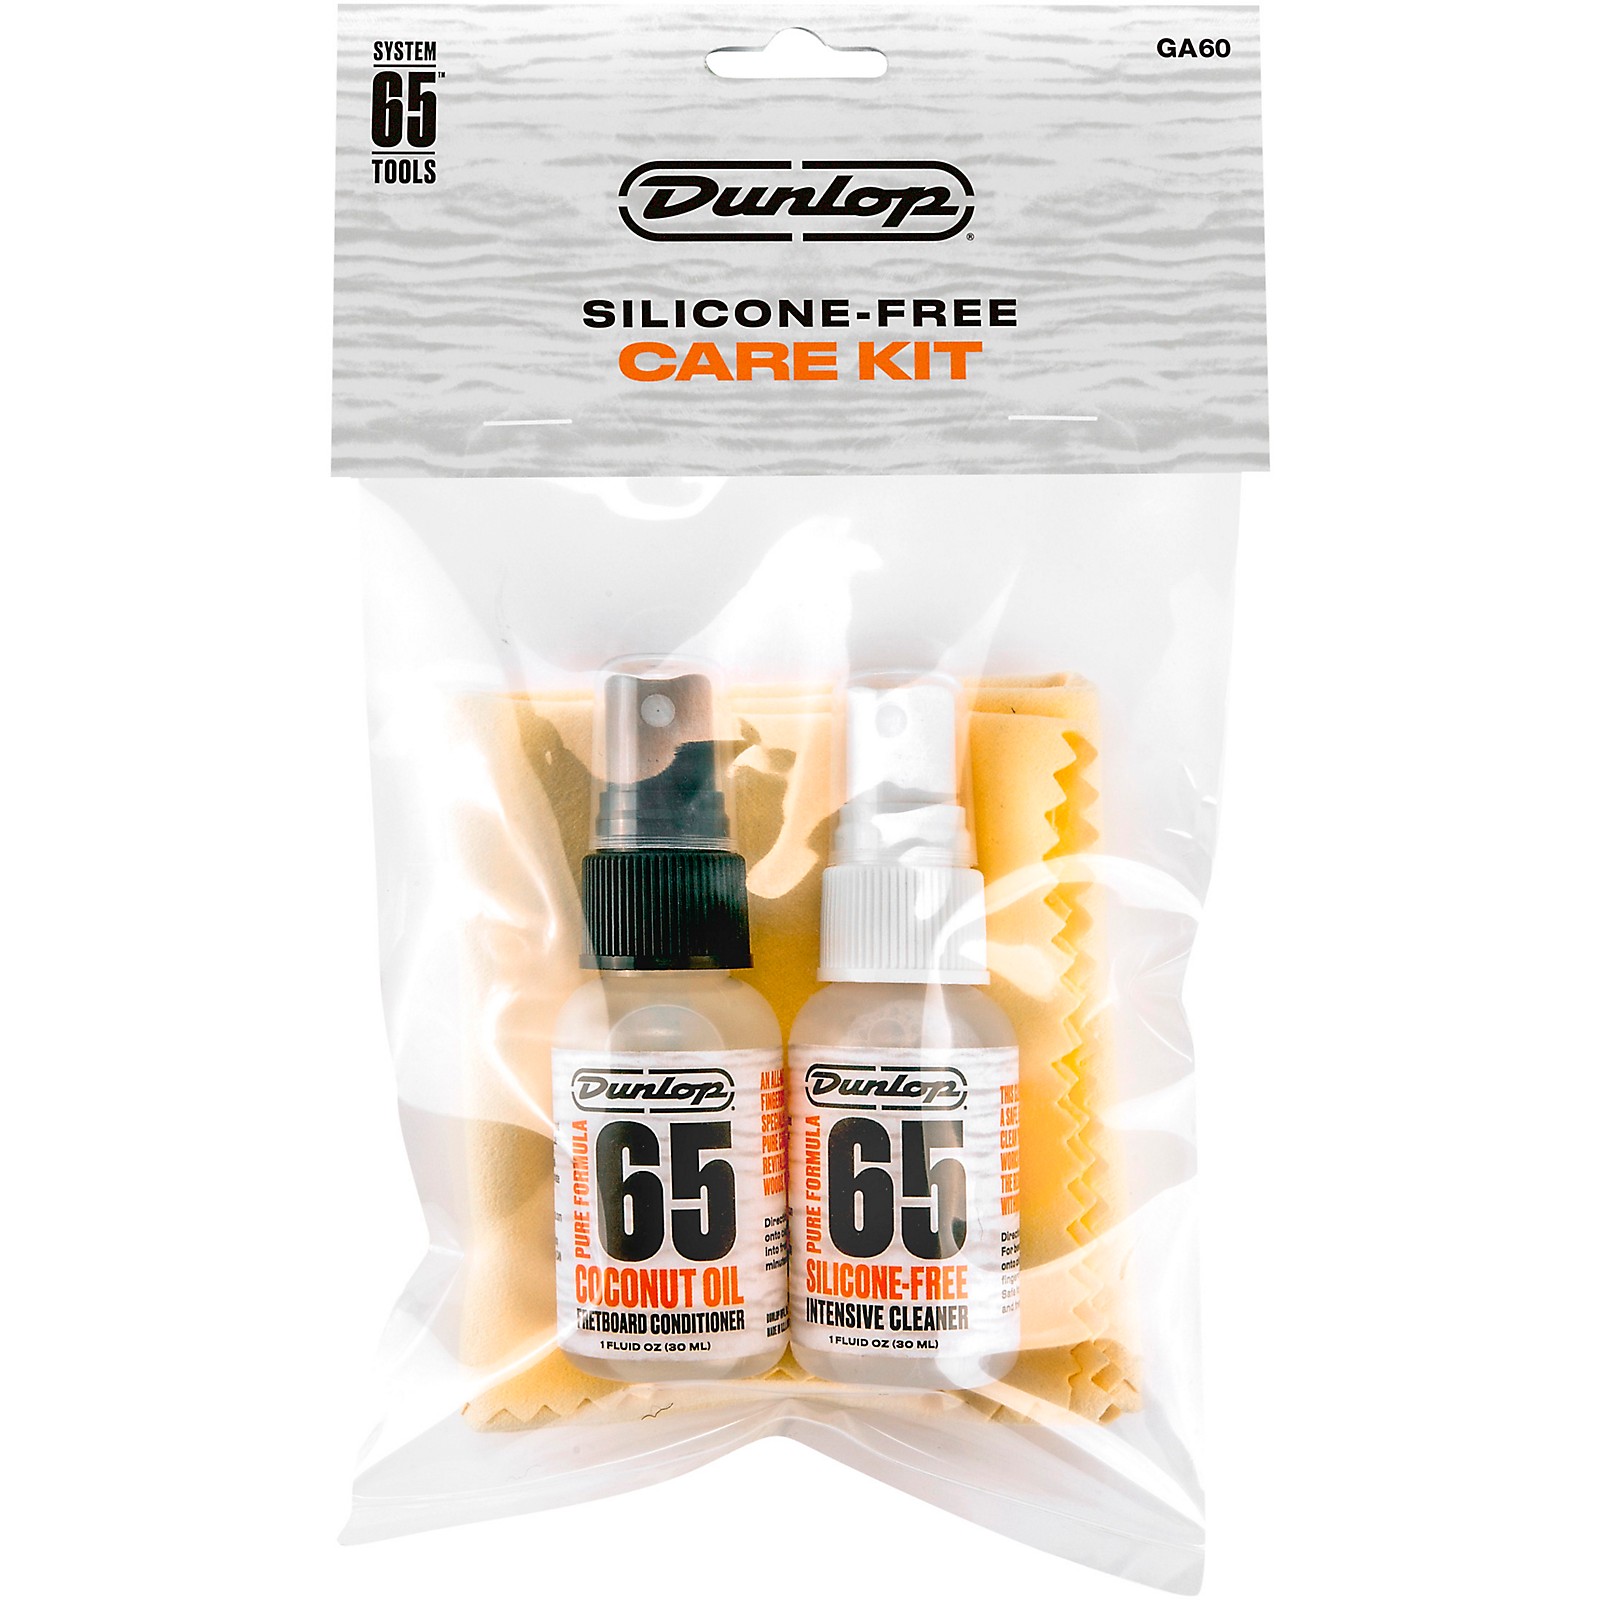 Dunlop Silicone-Free Care Kit